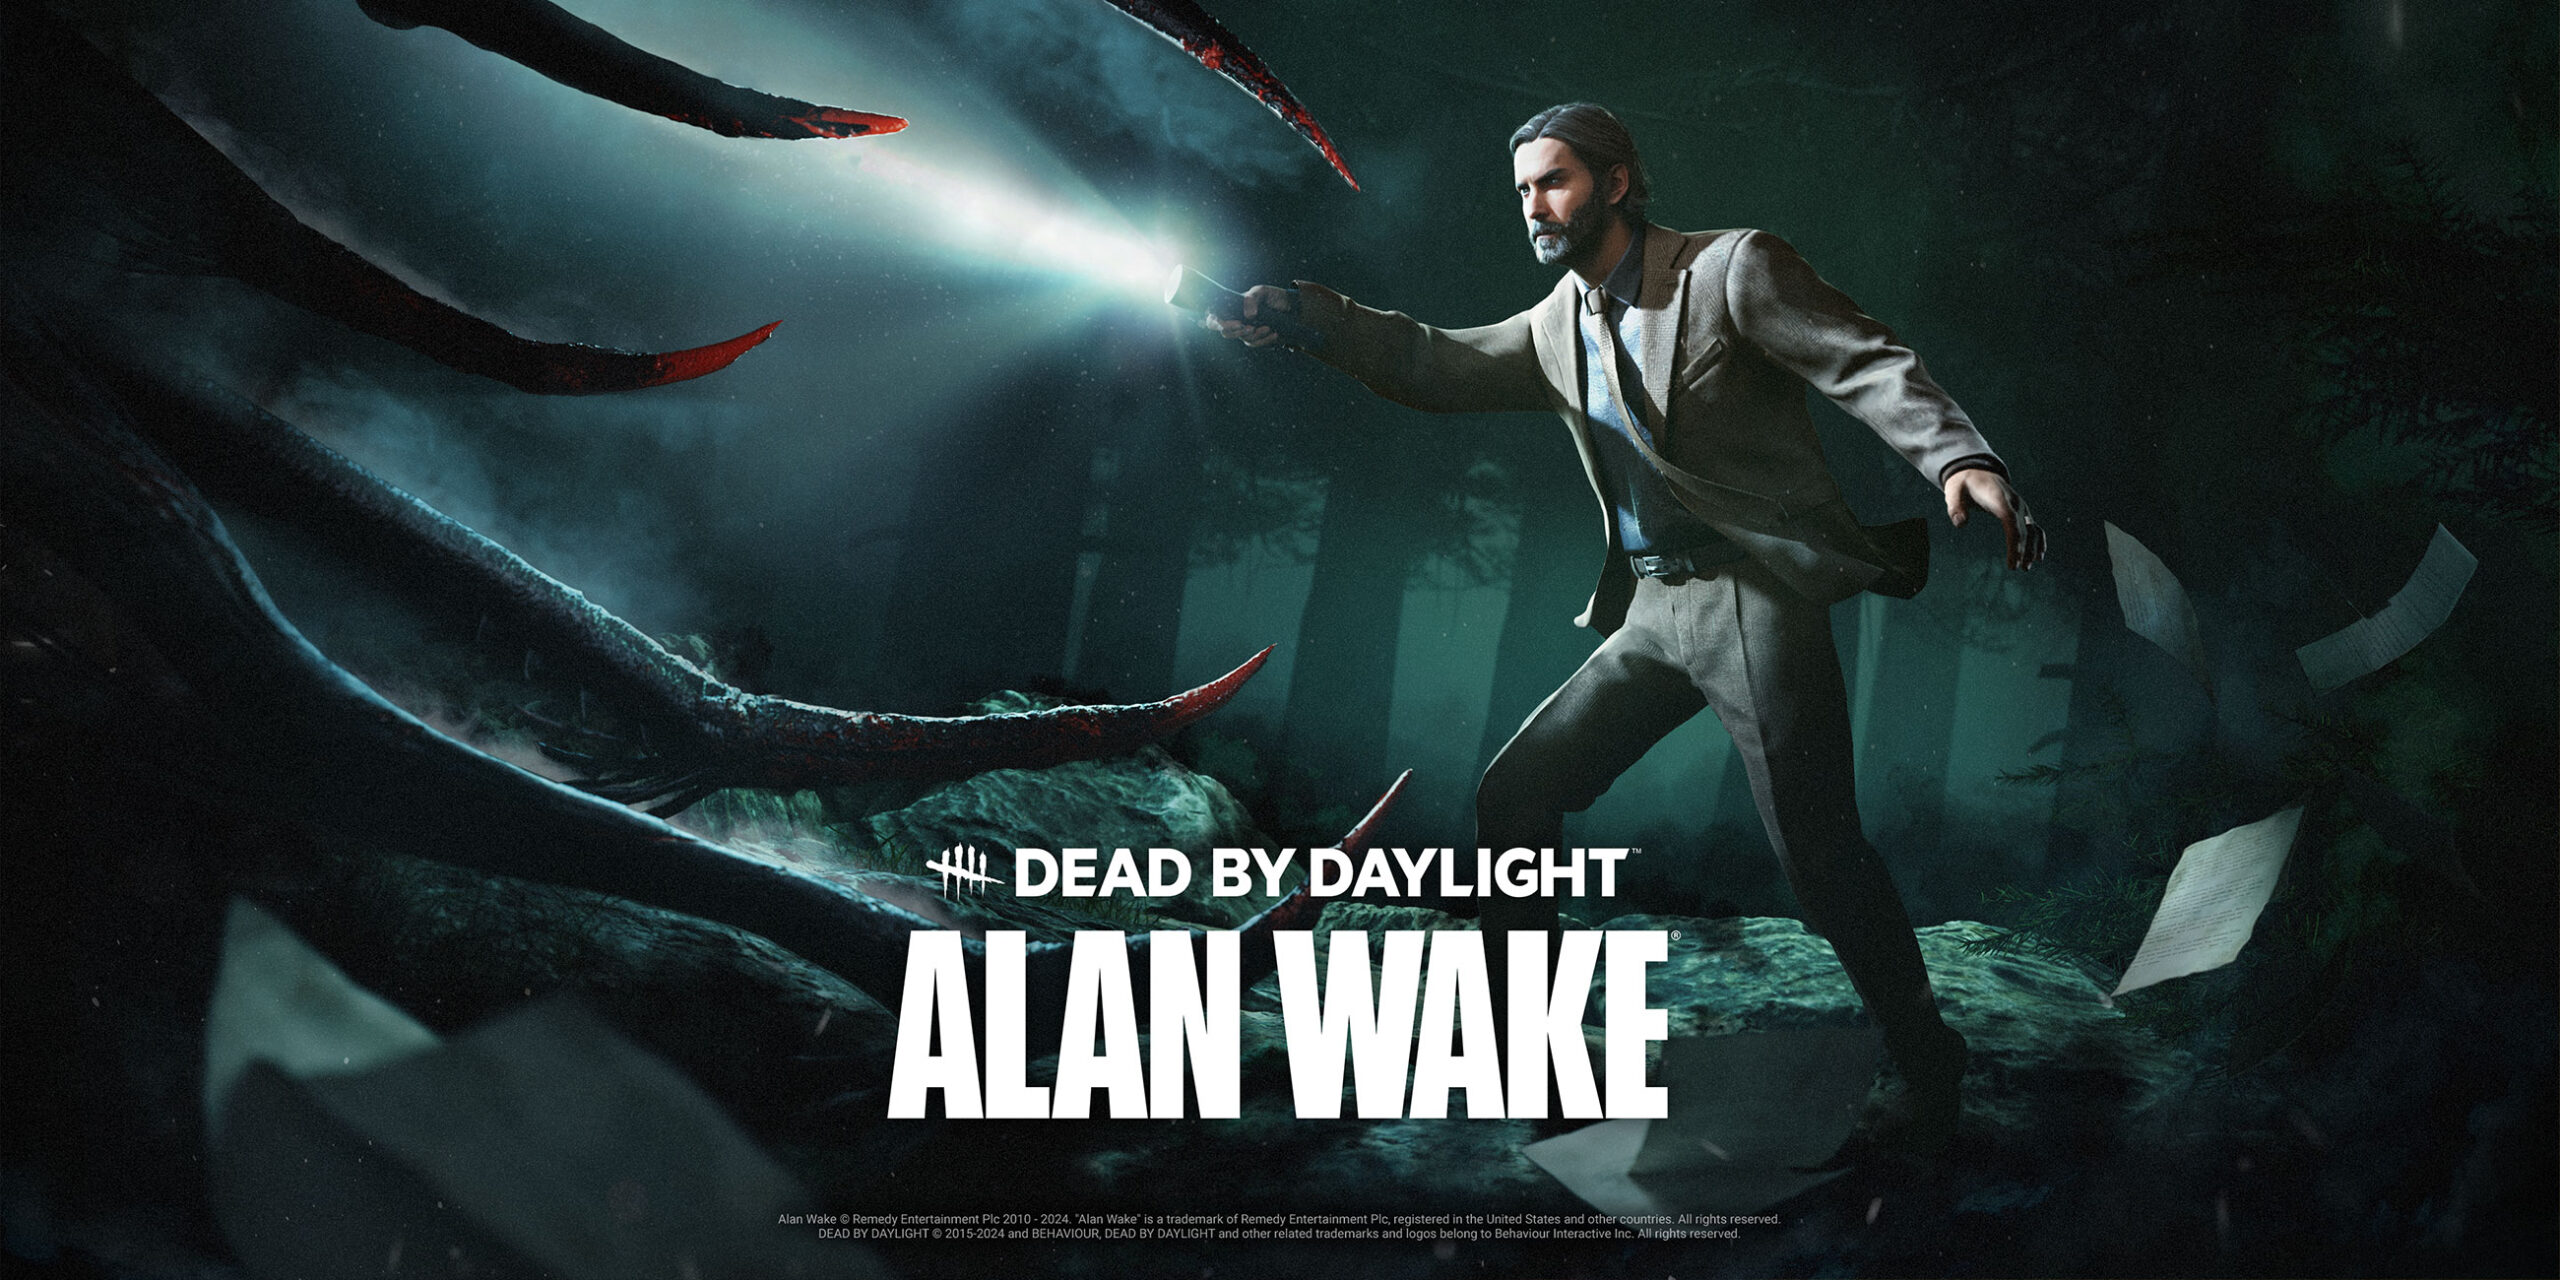 Alan Wake Remastered has finally made its money back